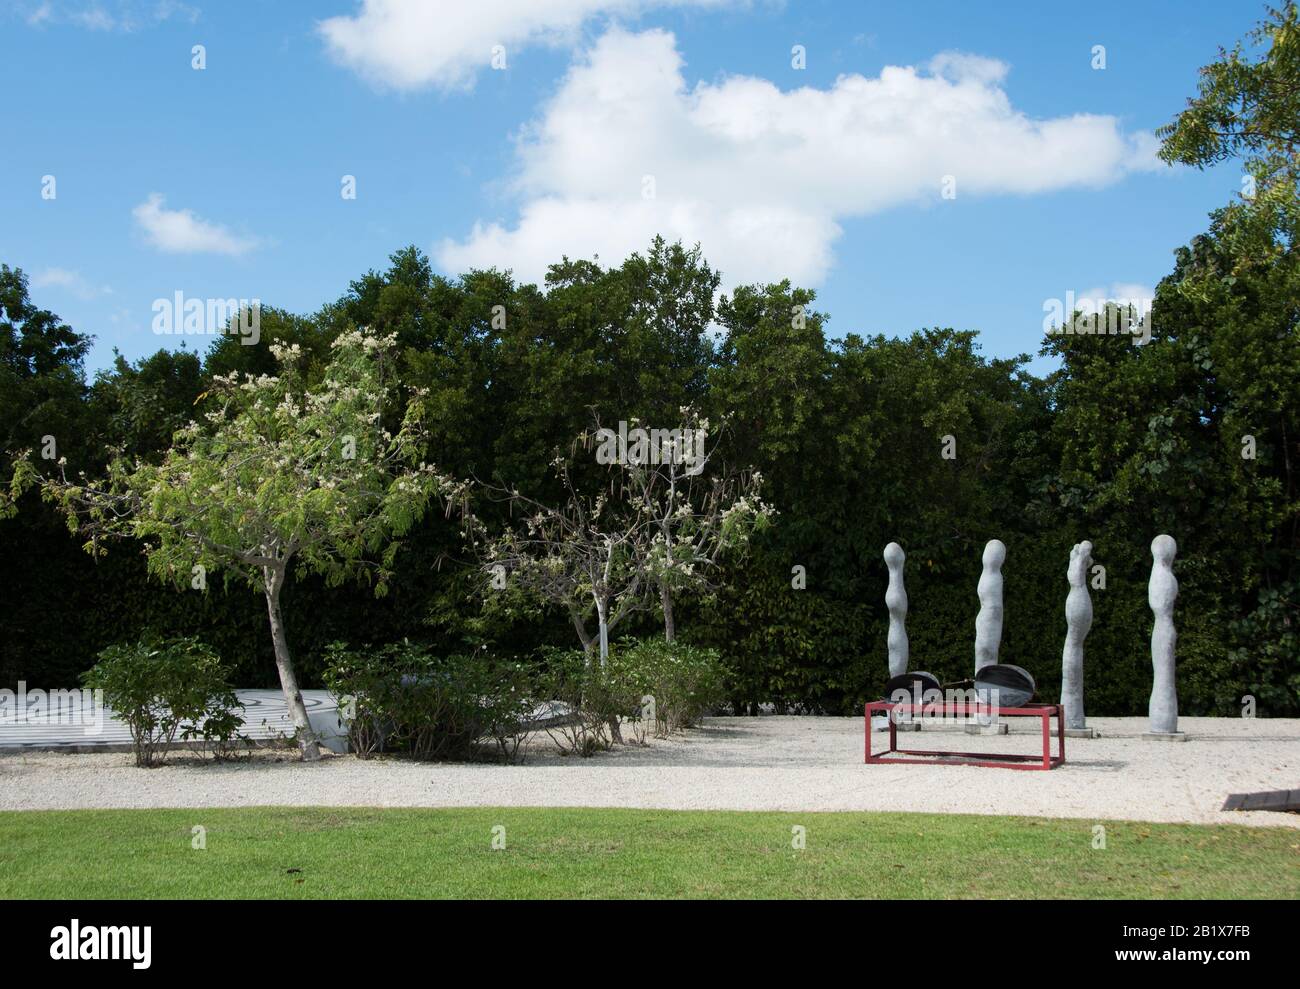 Deutsche Bank Sculpture Garden at National Gallery of the Cayman Islands Stock Photo